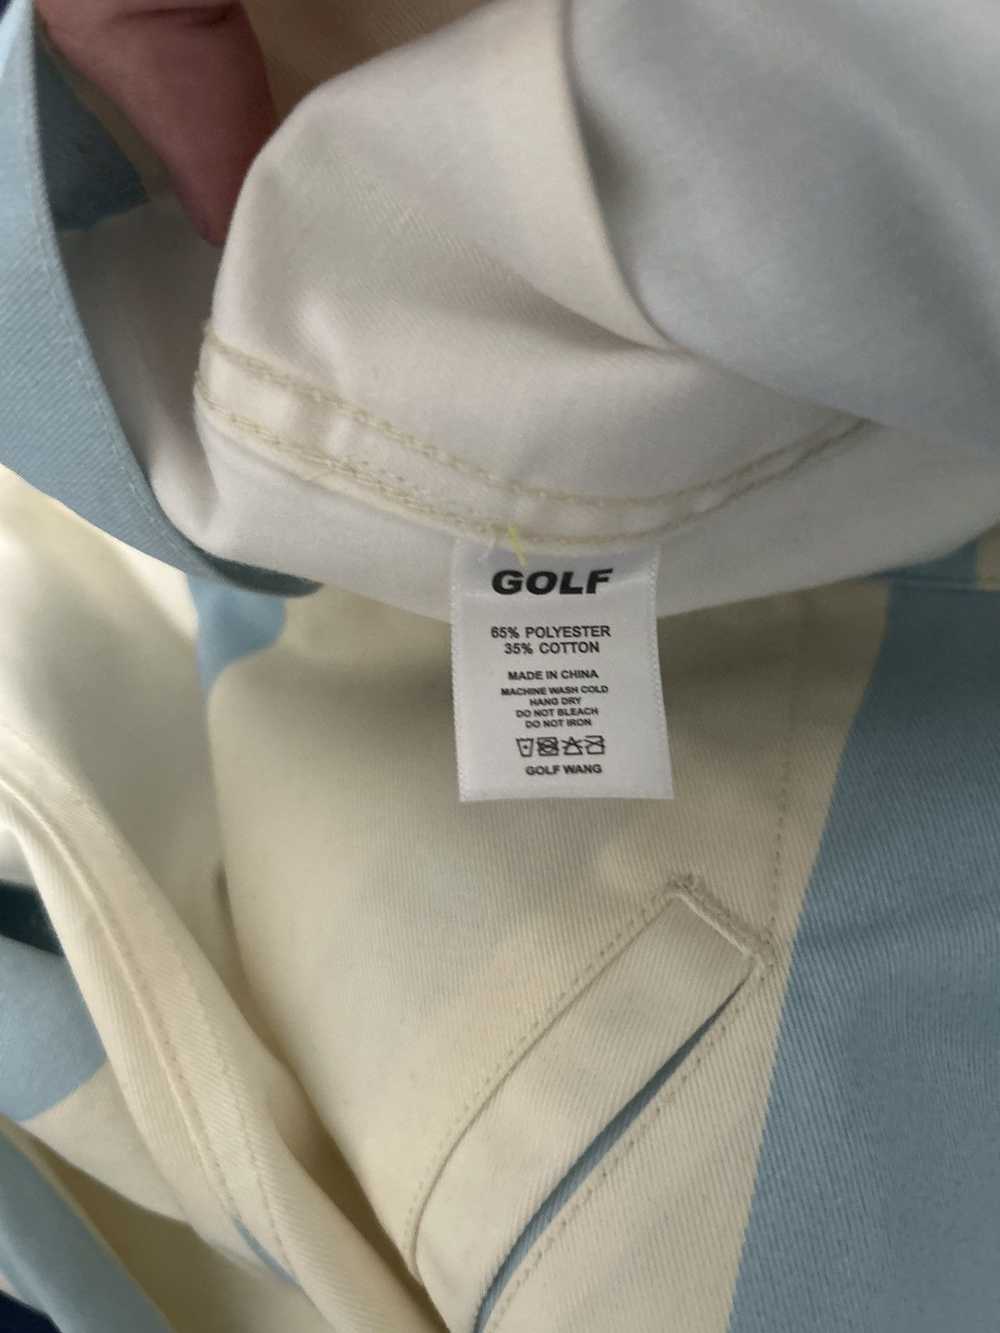 Golf Wang Golfwang Workwear jacket - image 3